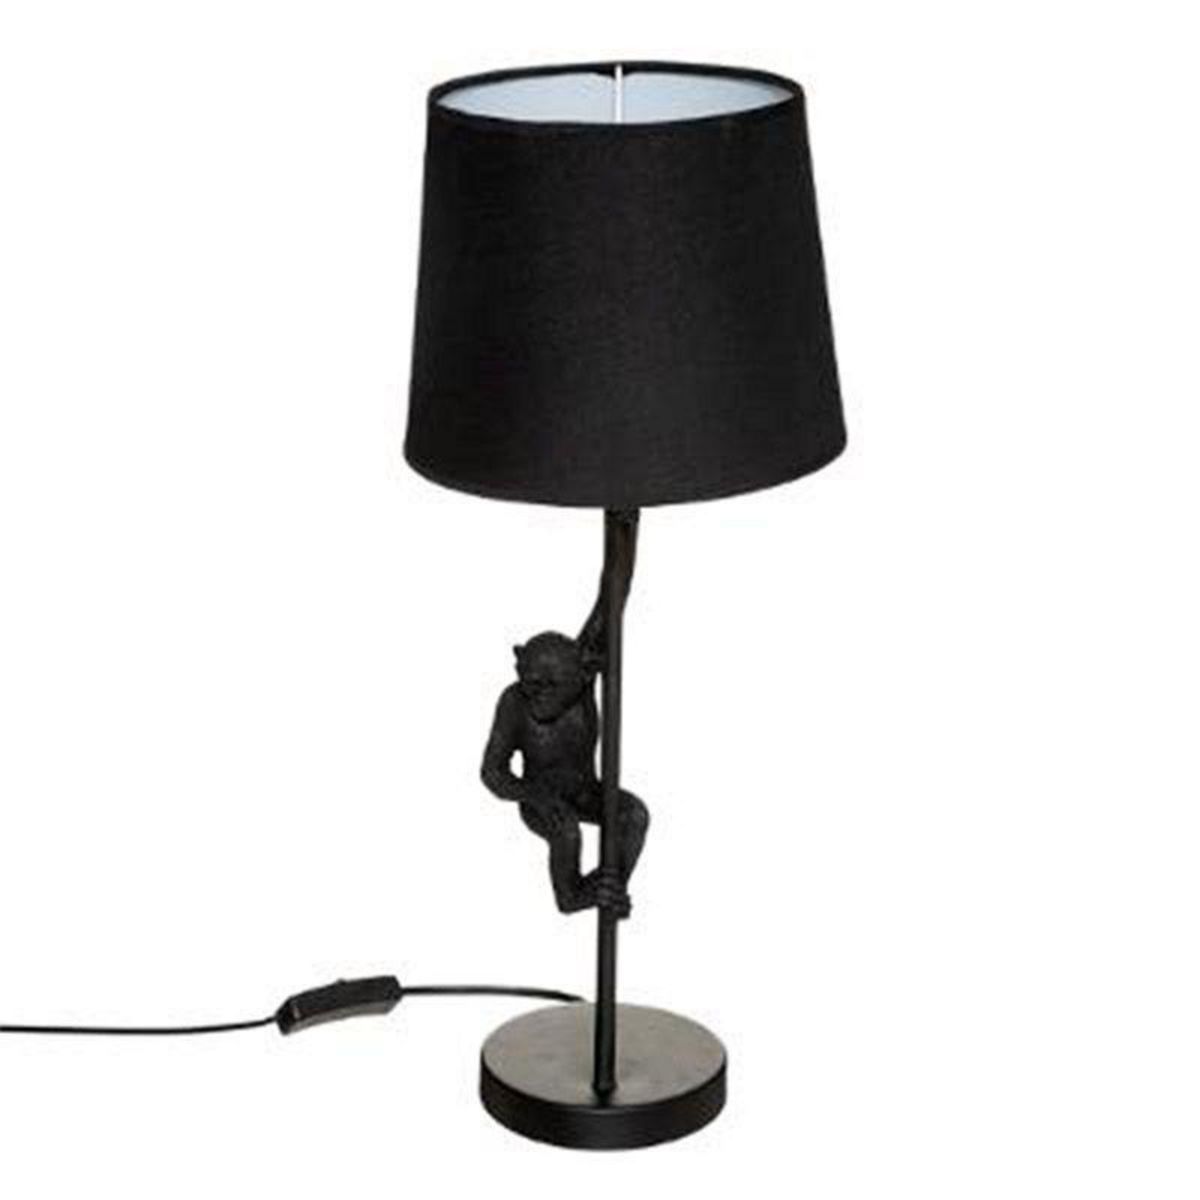  Lampe à Poser Design  Singe  49cm Noir